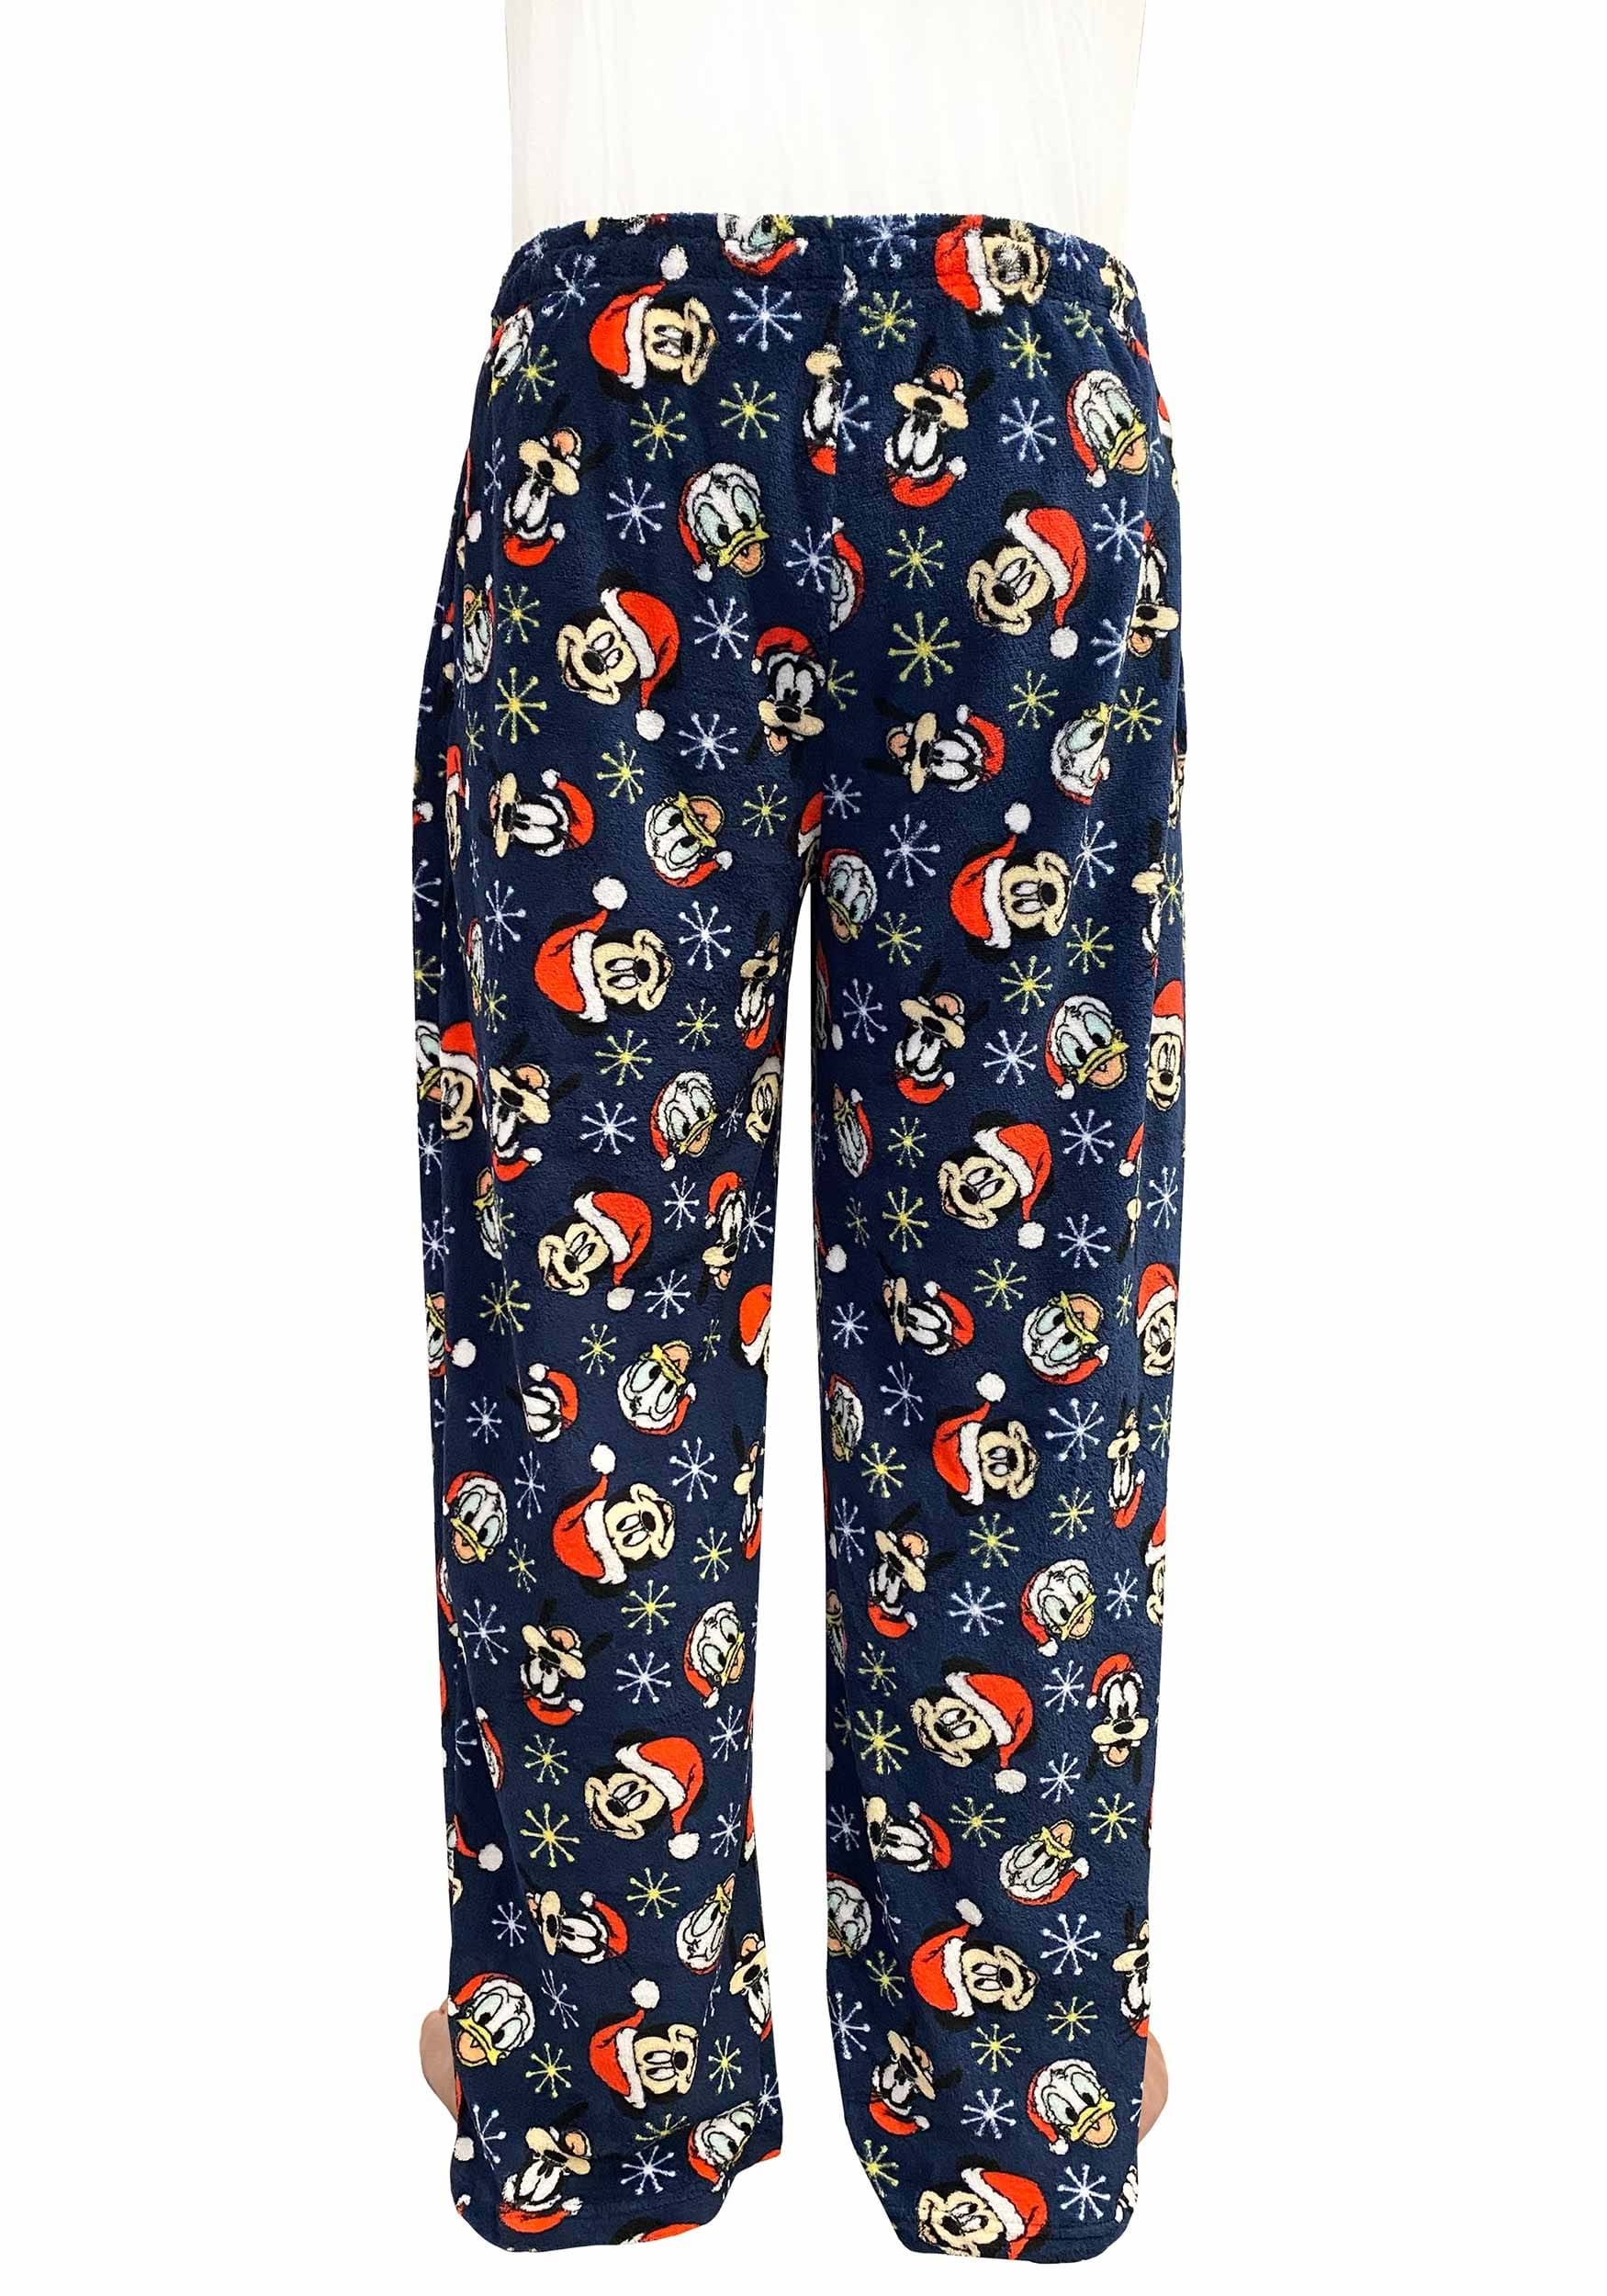 Mickey Mouse Goofy Donald Duck as Santa Ho Ho Ho Christmas Pajama Pant